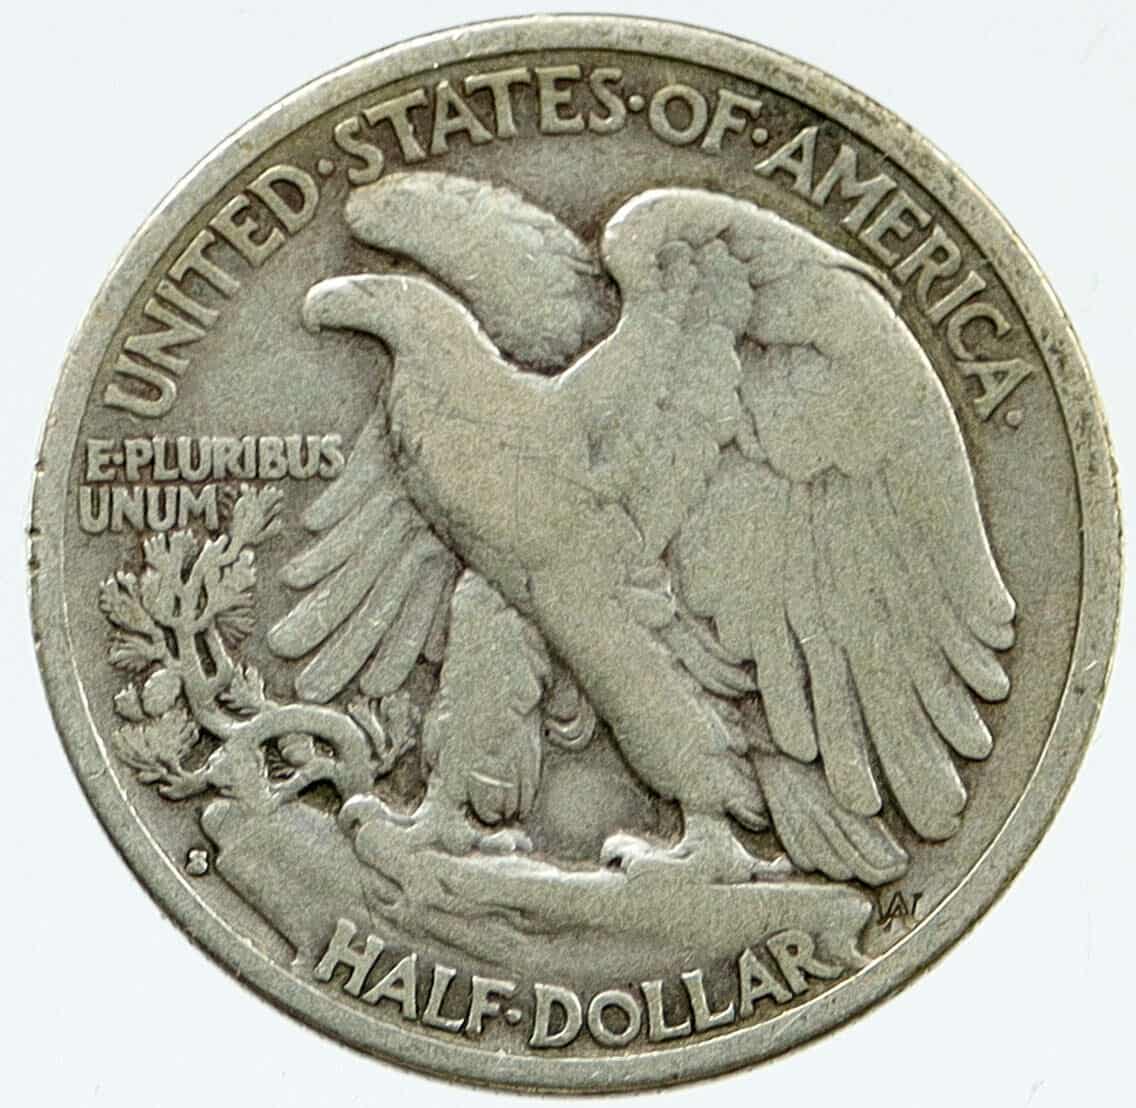 1937 Half Dollar Value for “S” Mint Mark